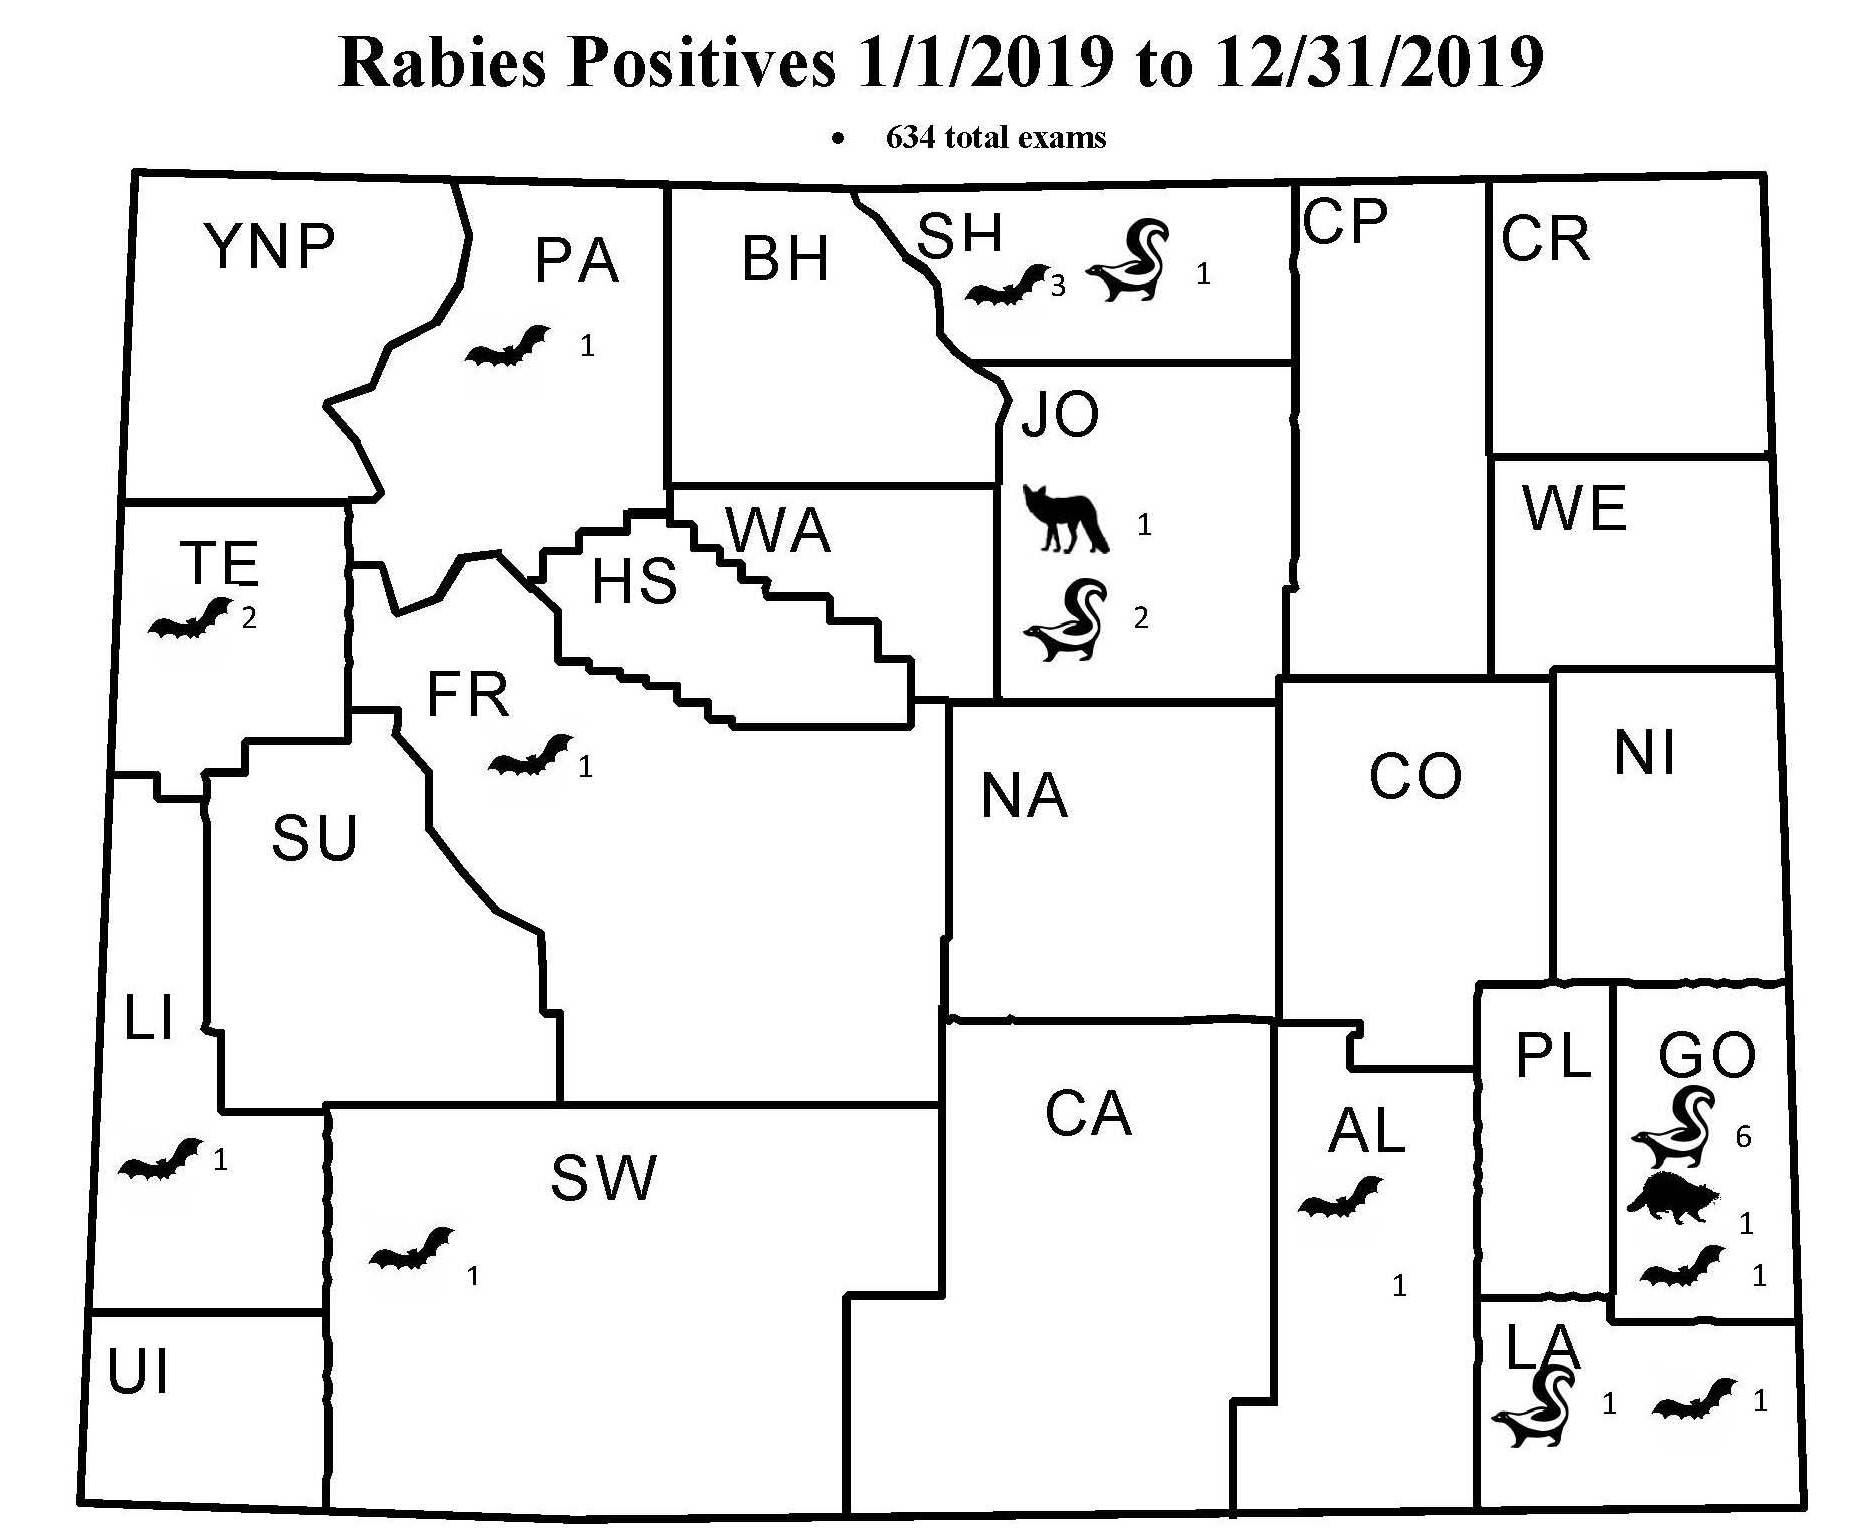 2019 rabies distribution map